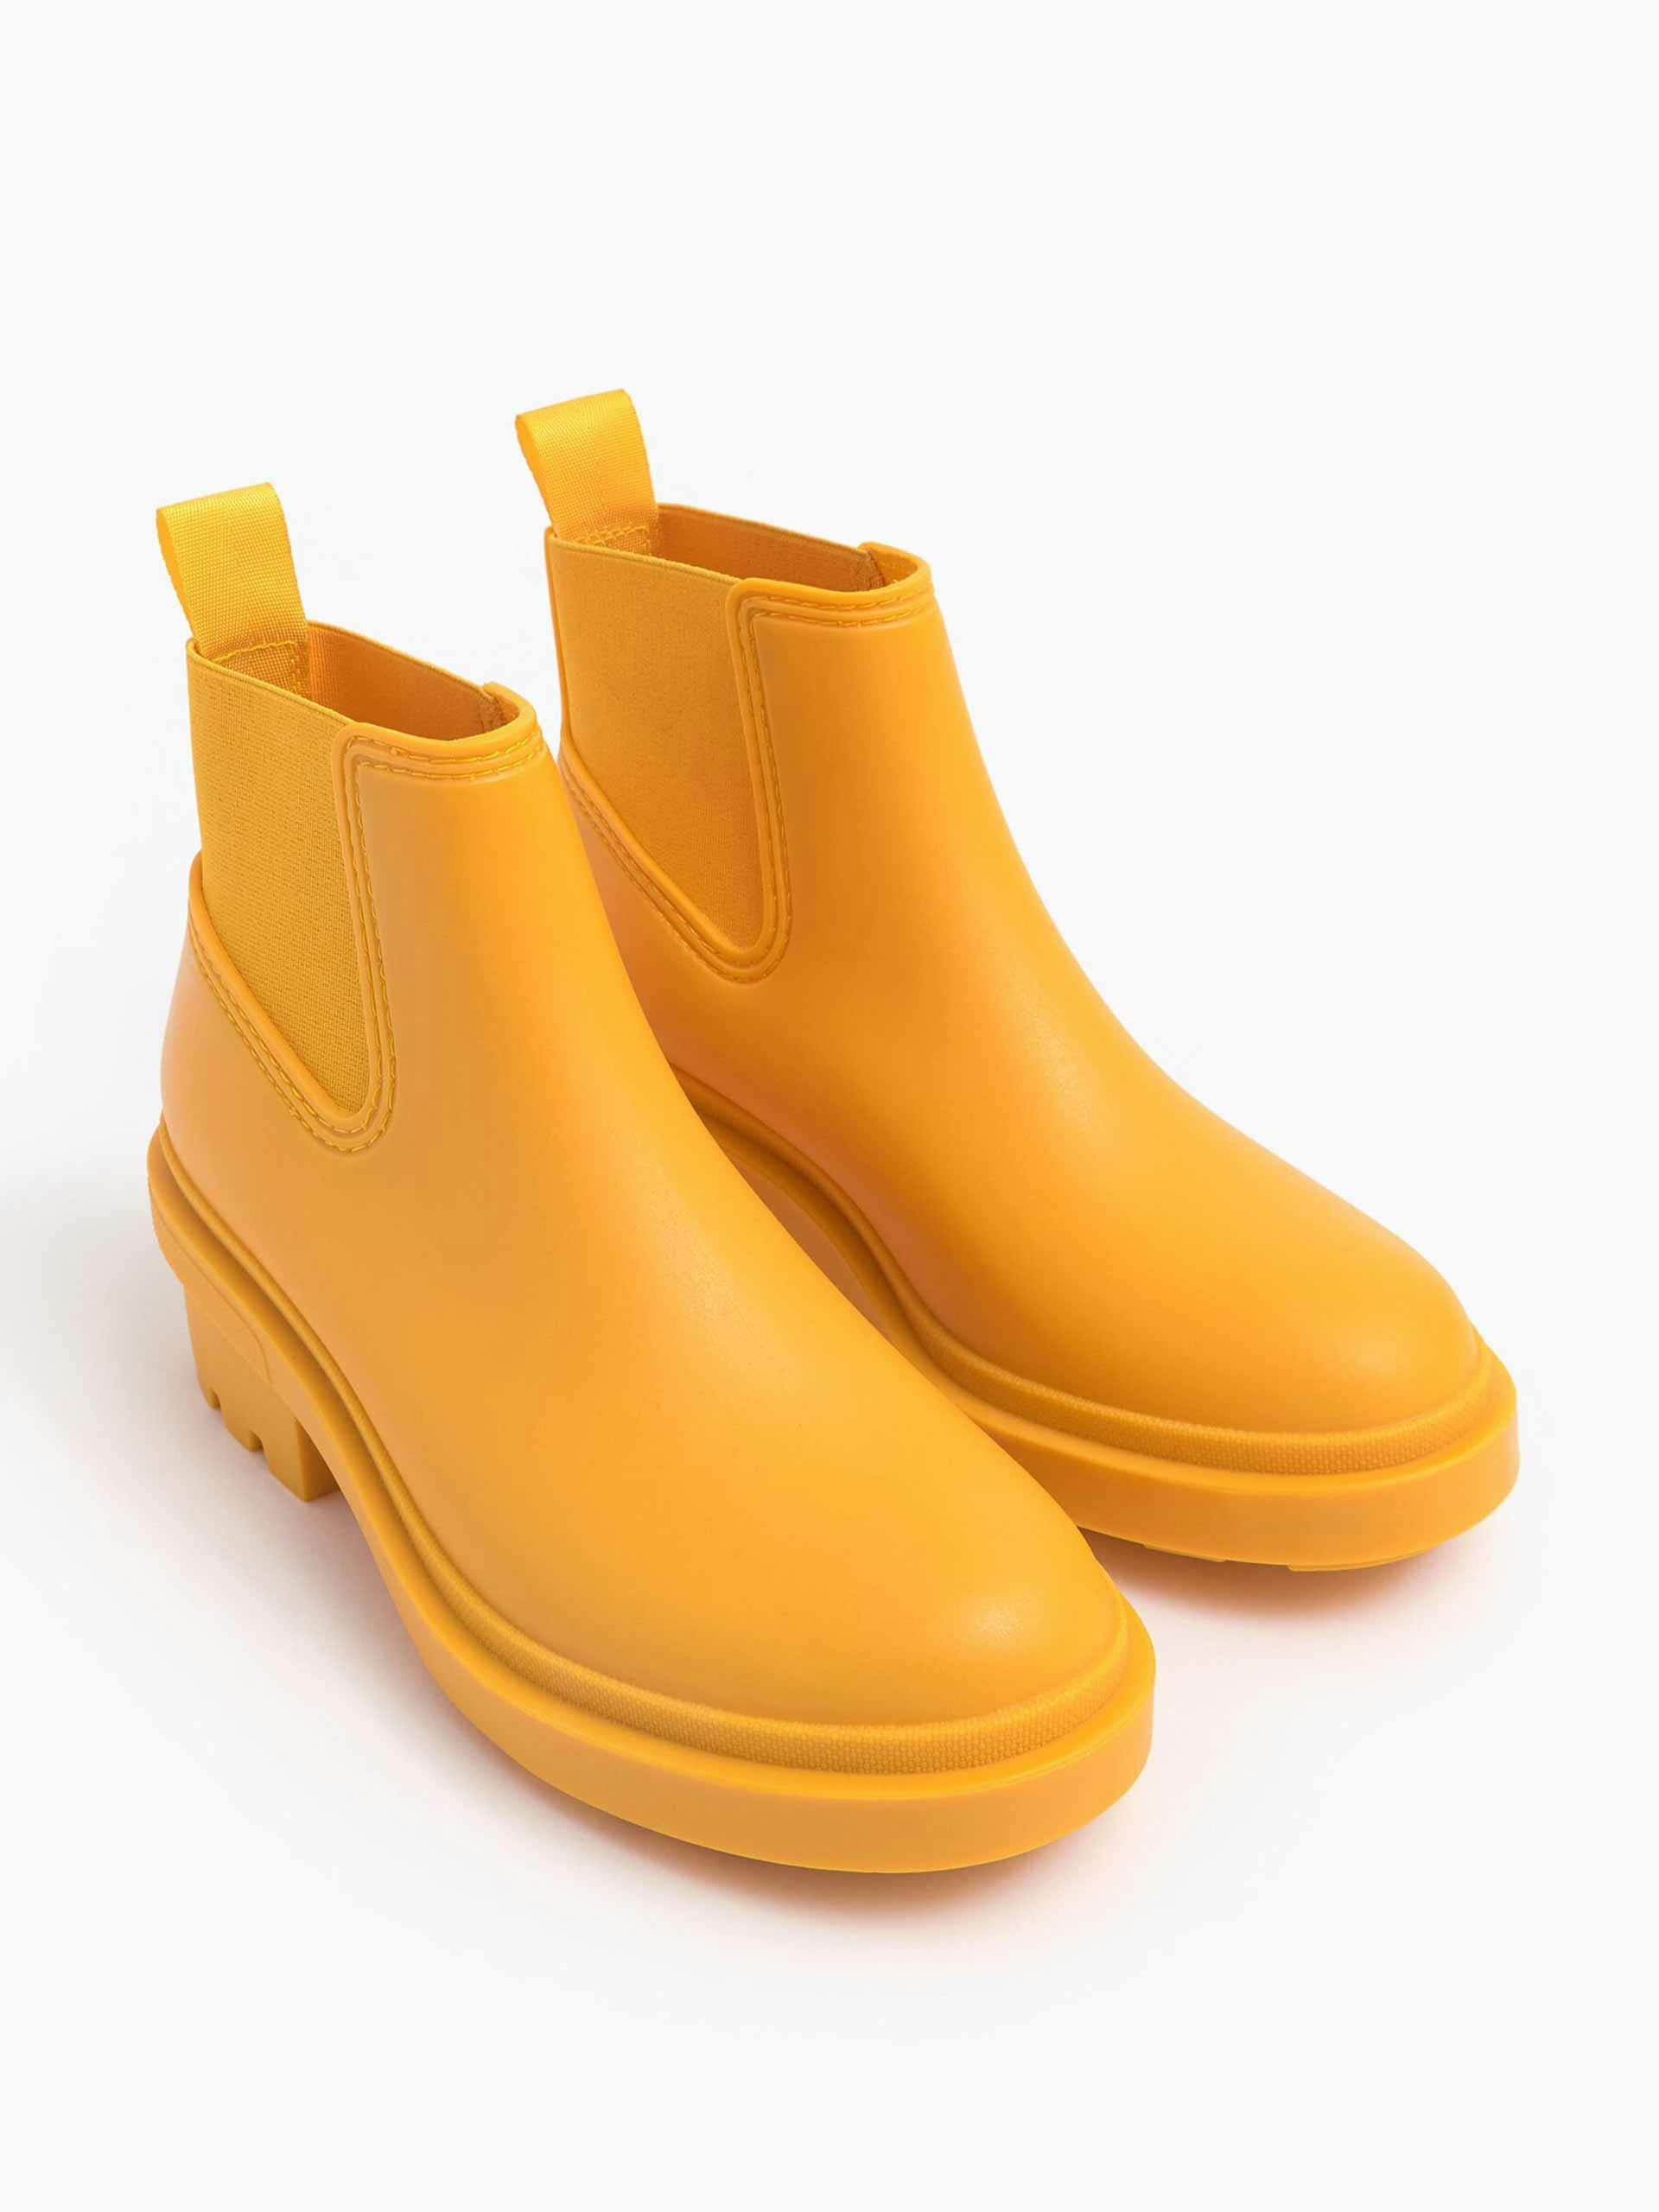 Yellow waterproof boots